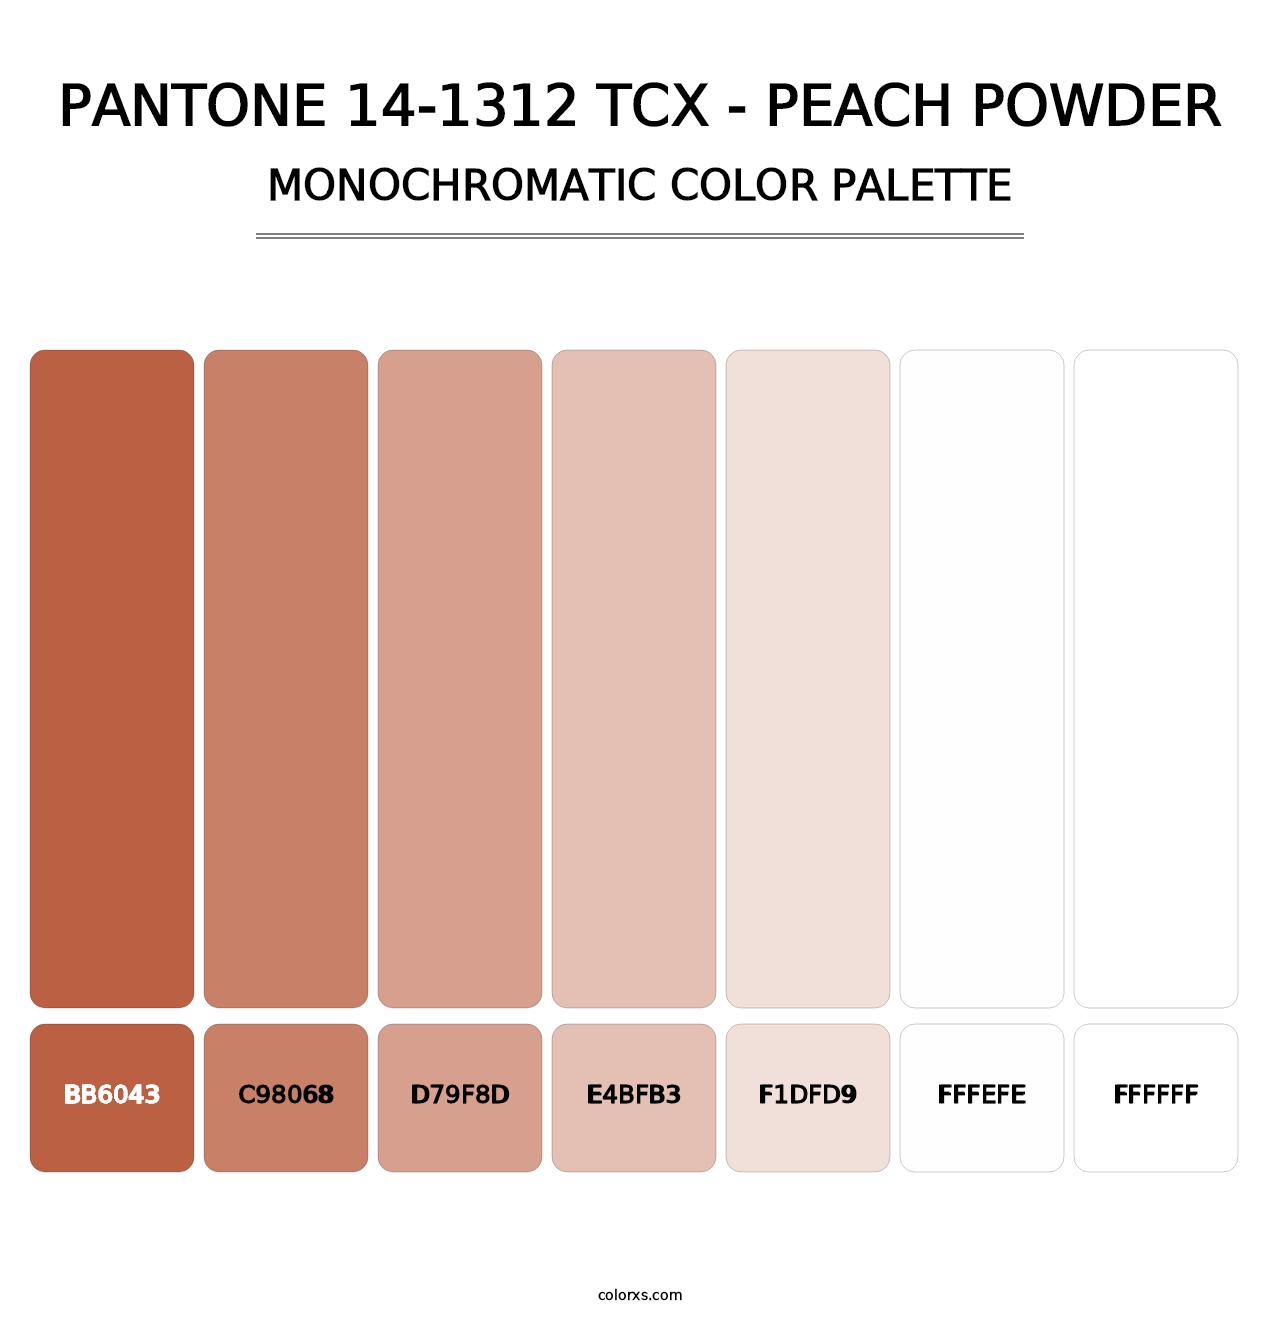 PANTONE 14-1312 TCX - Peach Powder - Monochromatic Color Palette